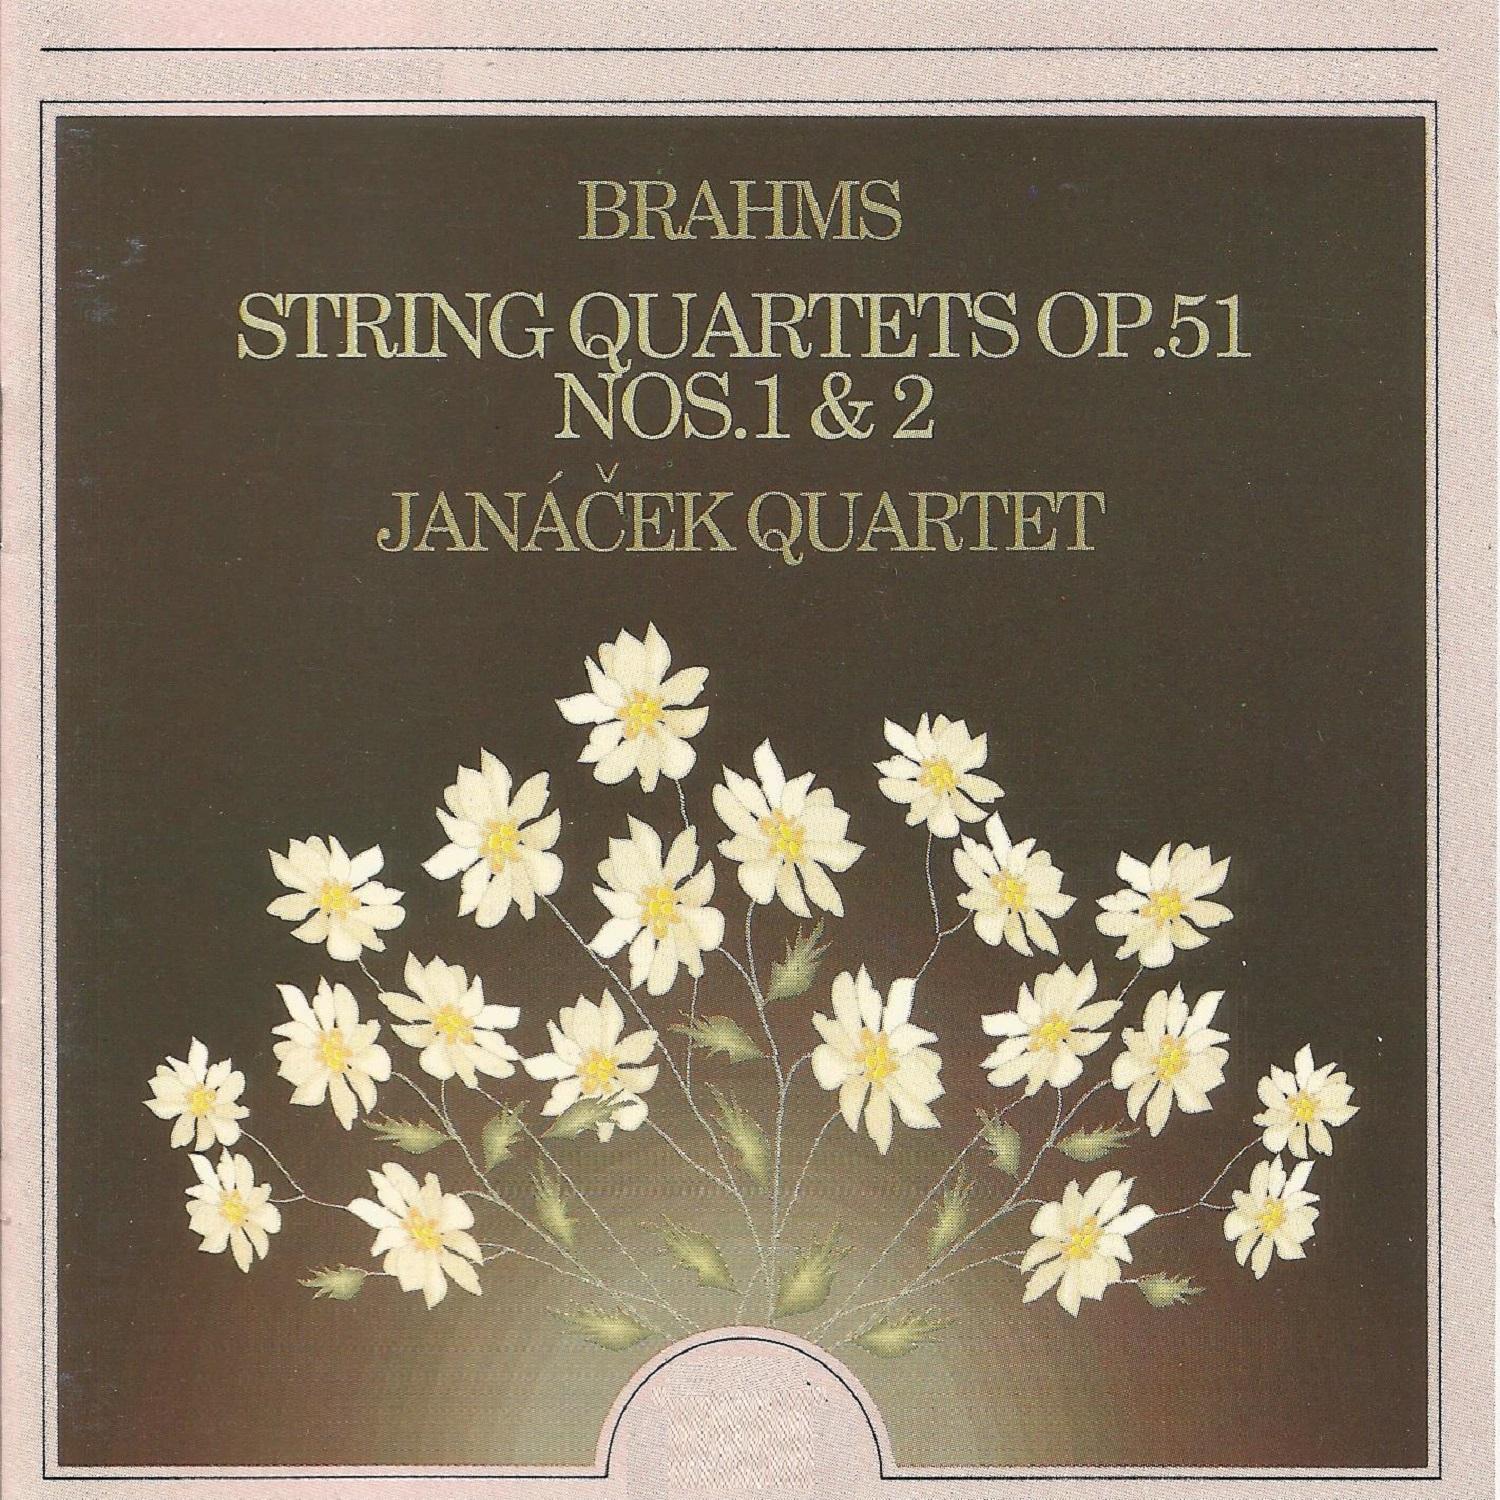 String Quartet No. 2 in A Minor, Op. 51 No. 2: II. Andante moderato